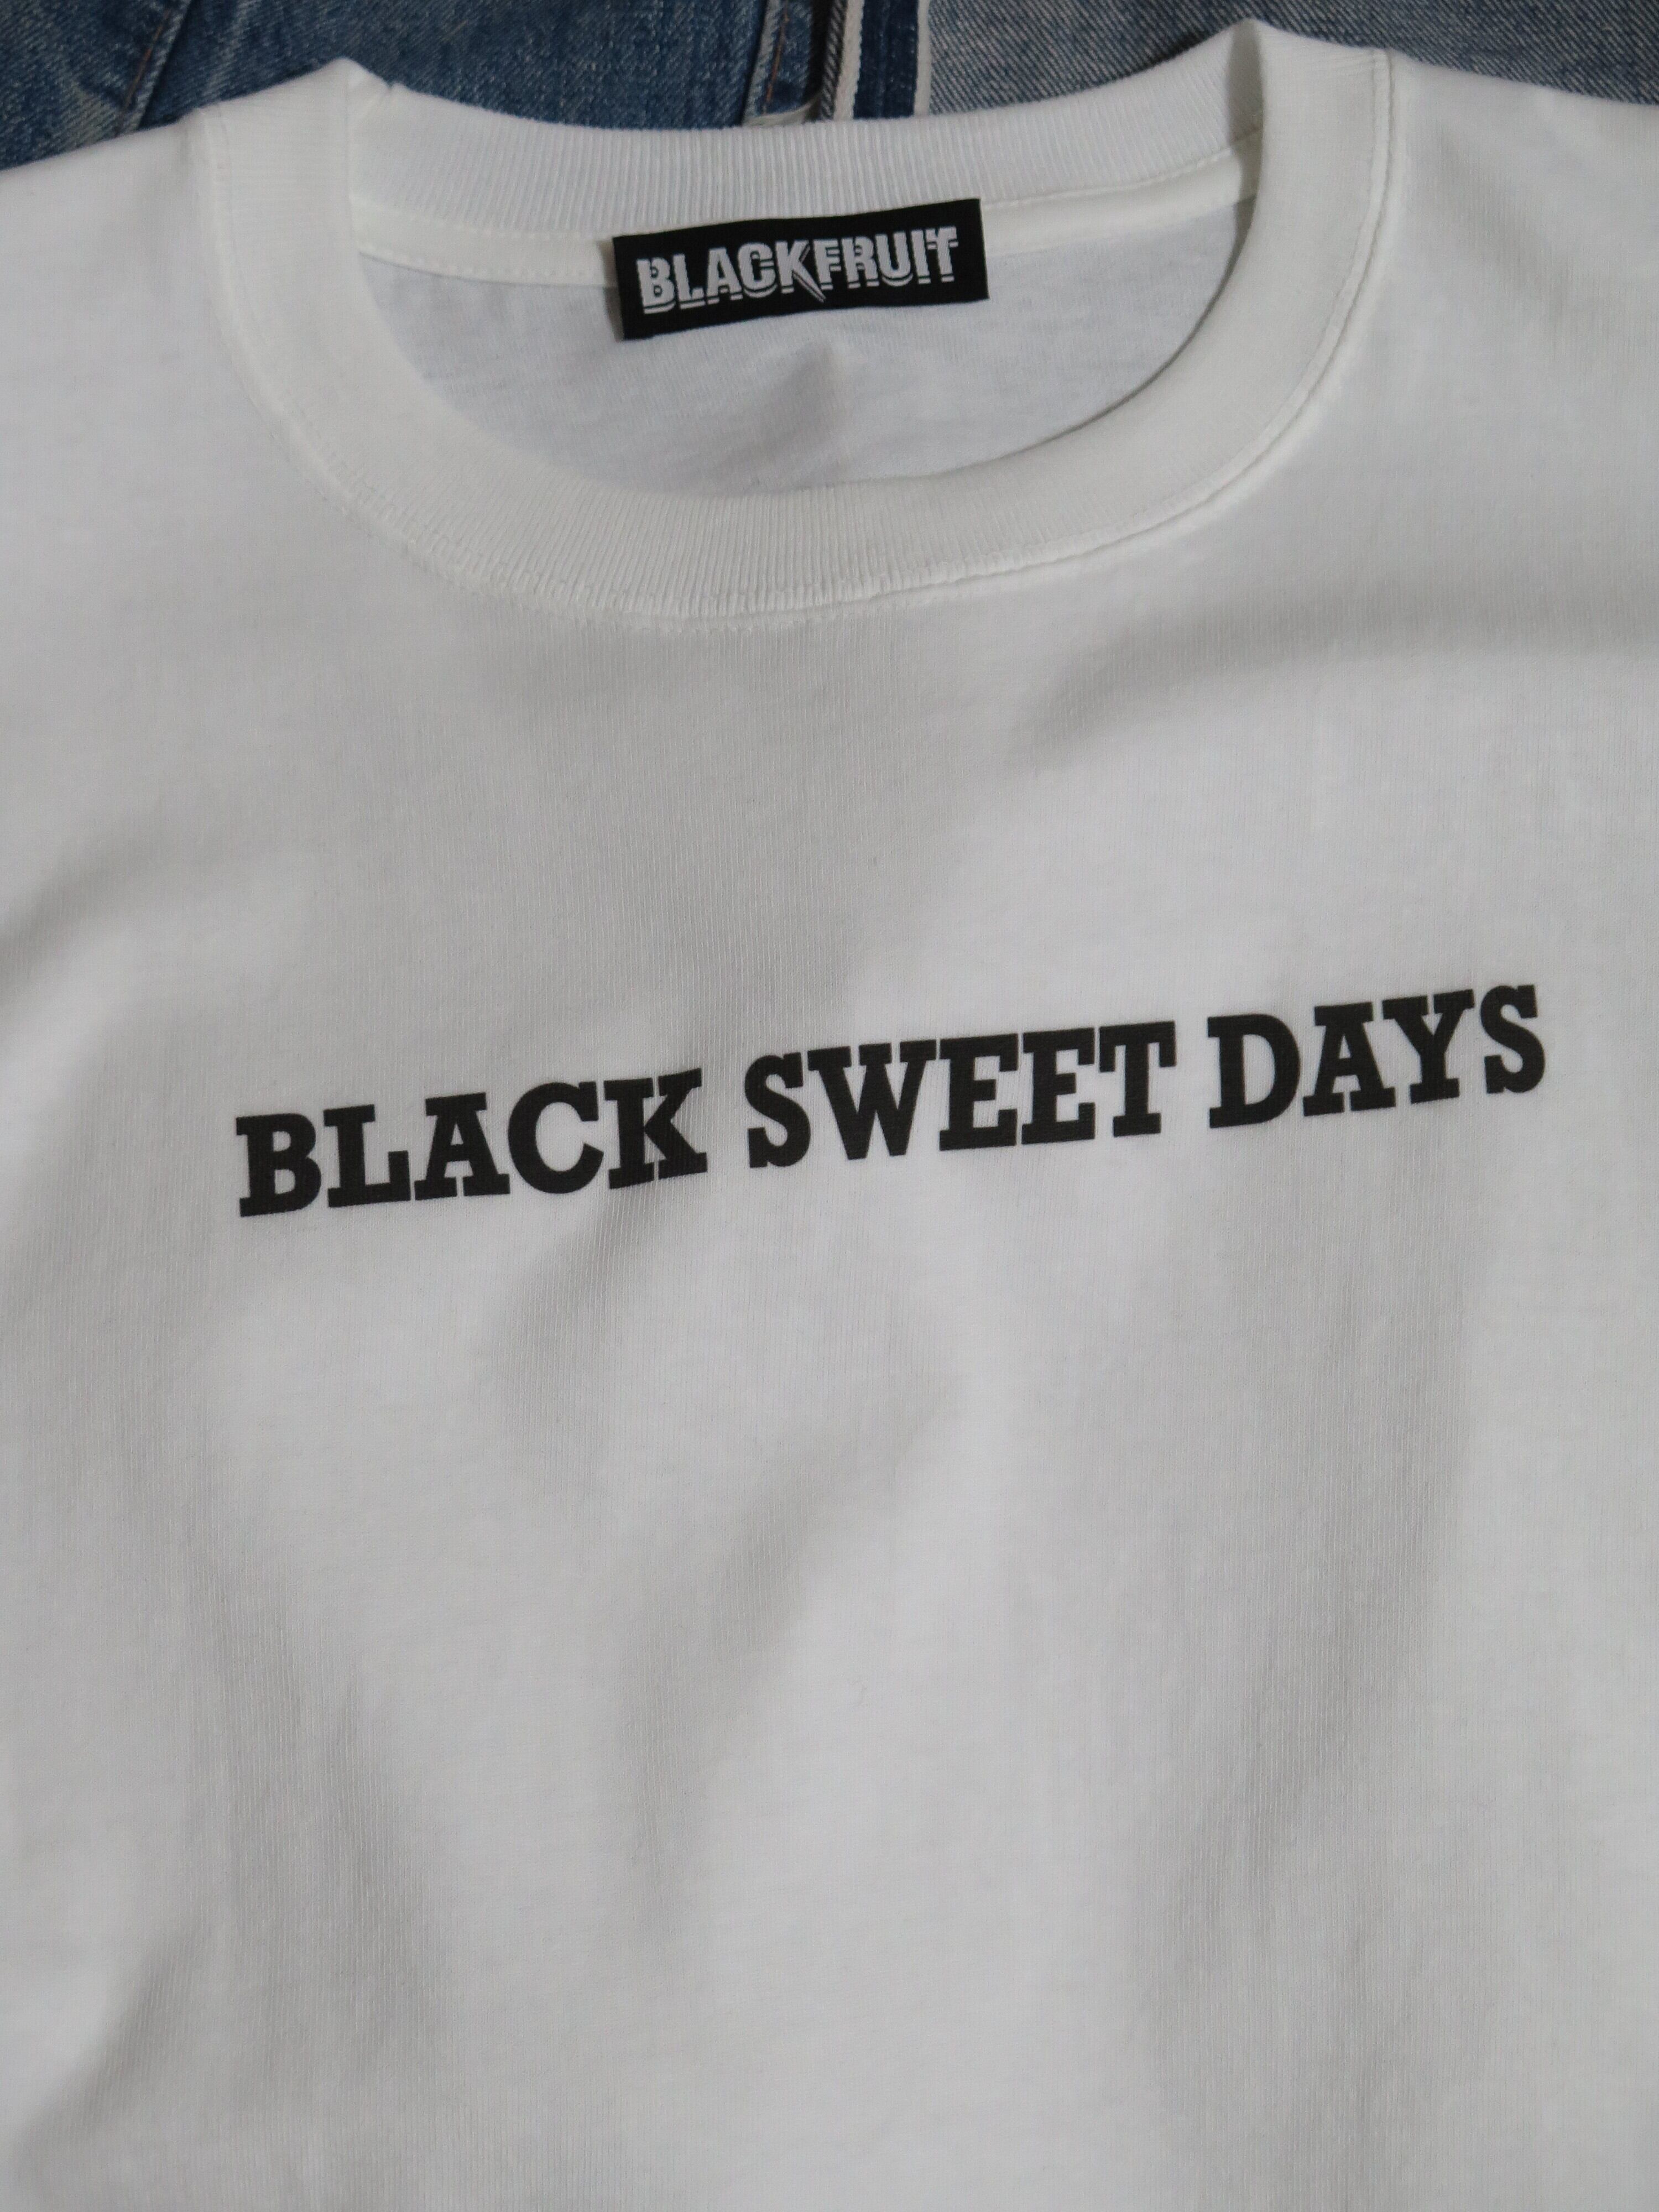 “BLACK SWEET DAYS” PRINTED WHITE TEE | BLACKFRUIT powered by BASE